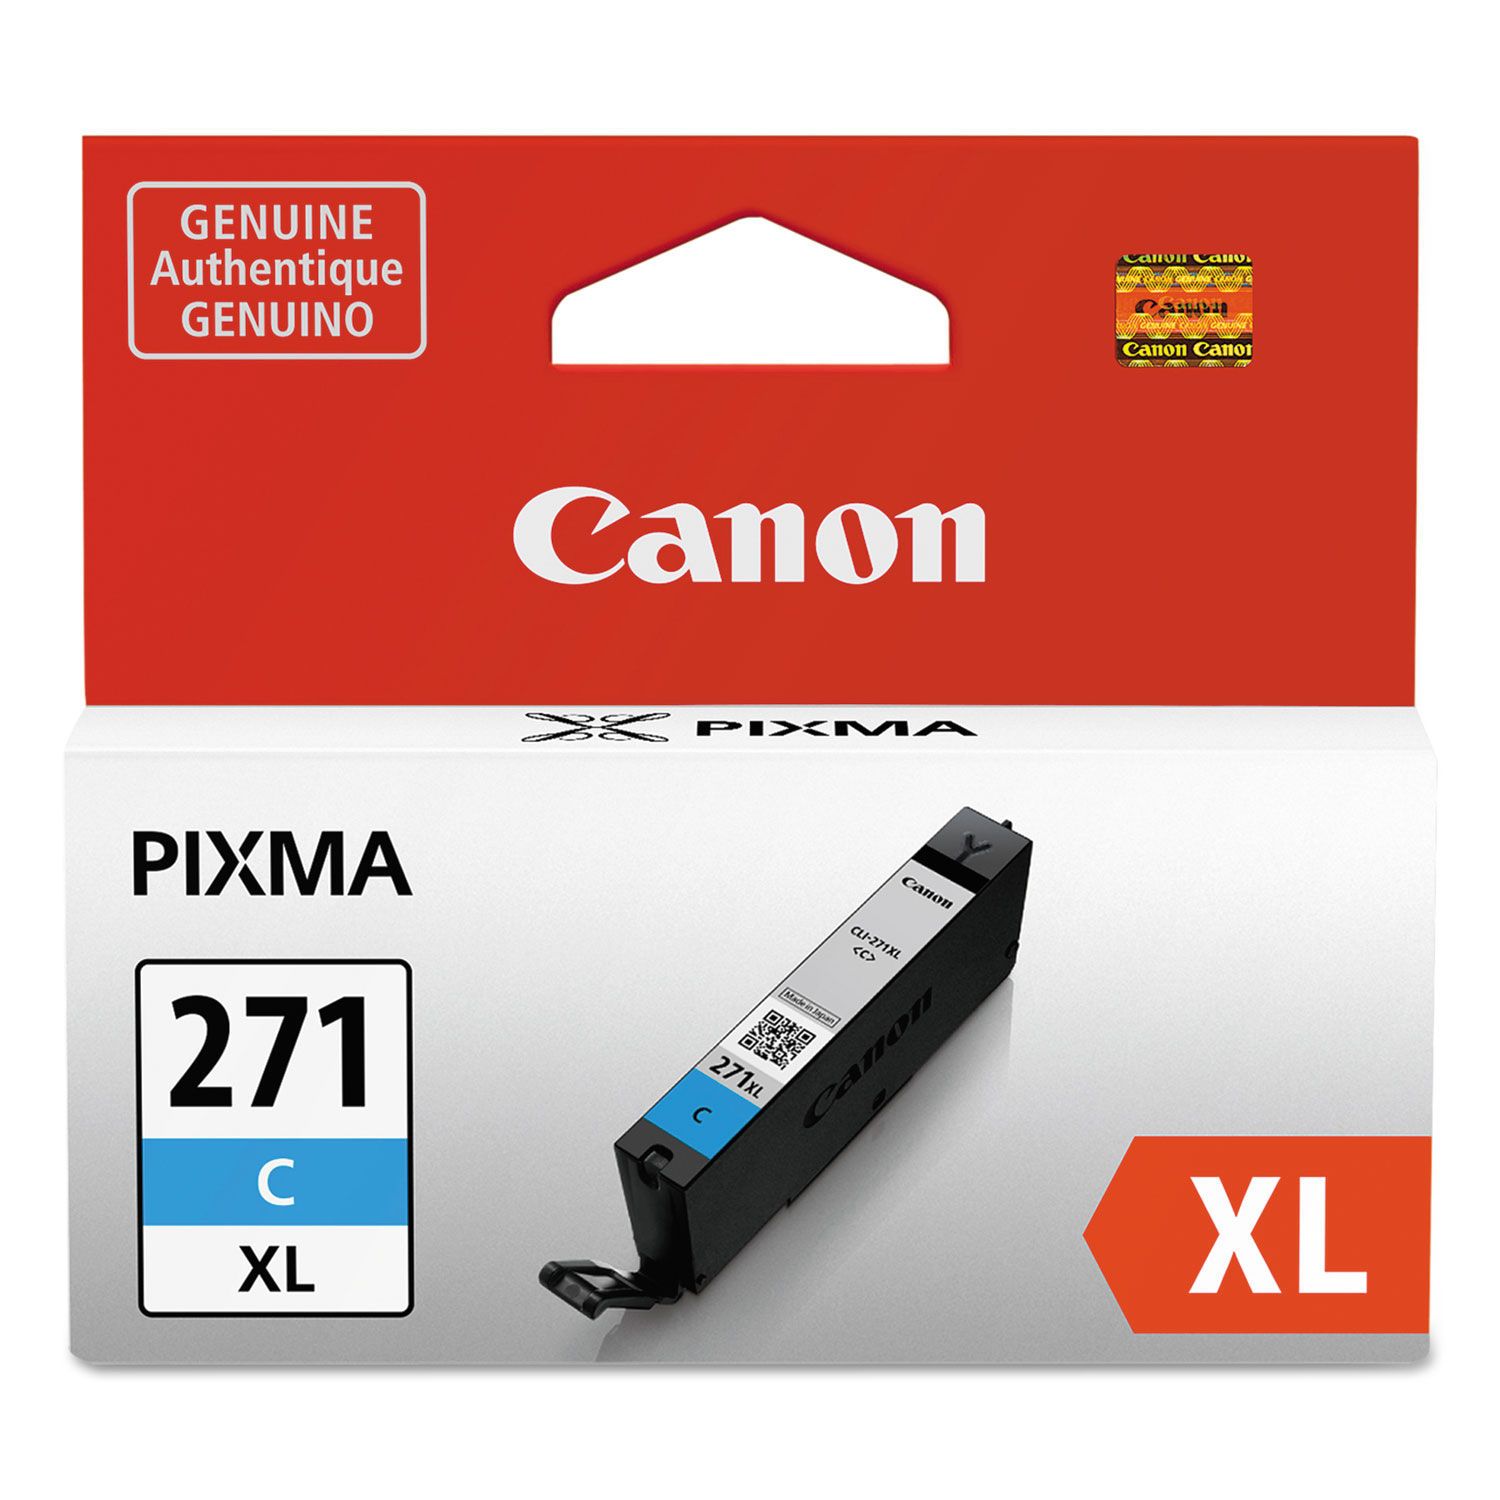 Absolute Toner Canon CLI-271XL Original Genuine OEM Cyan Ink Cartridge | 0337C001 Original Canon Cartridges